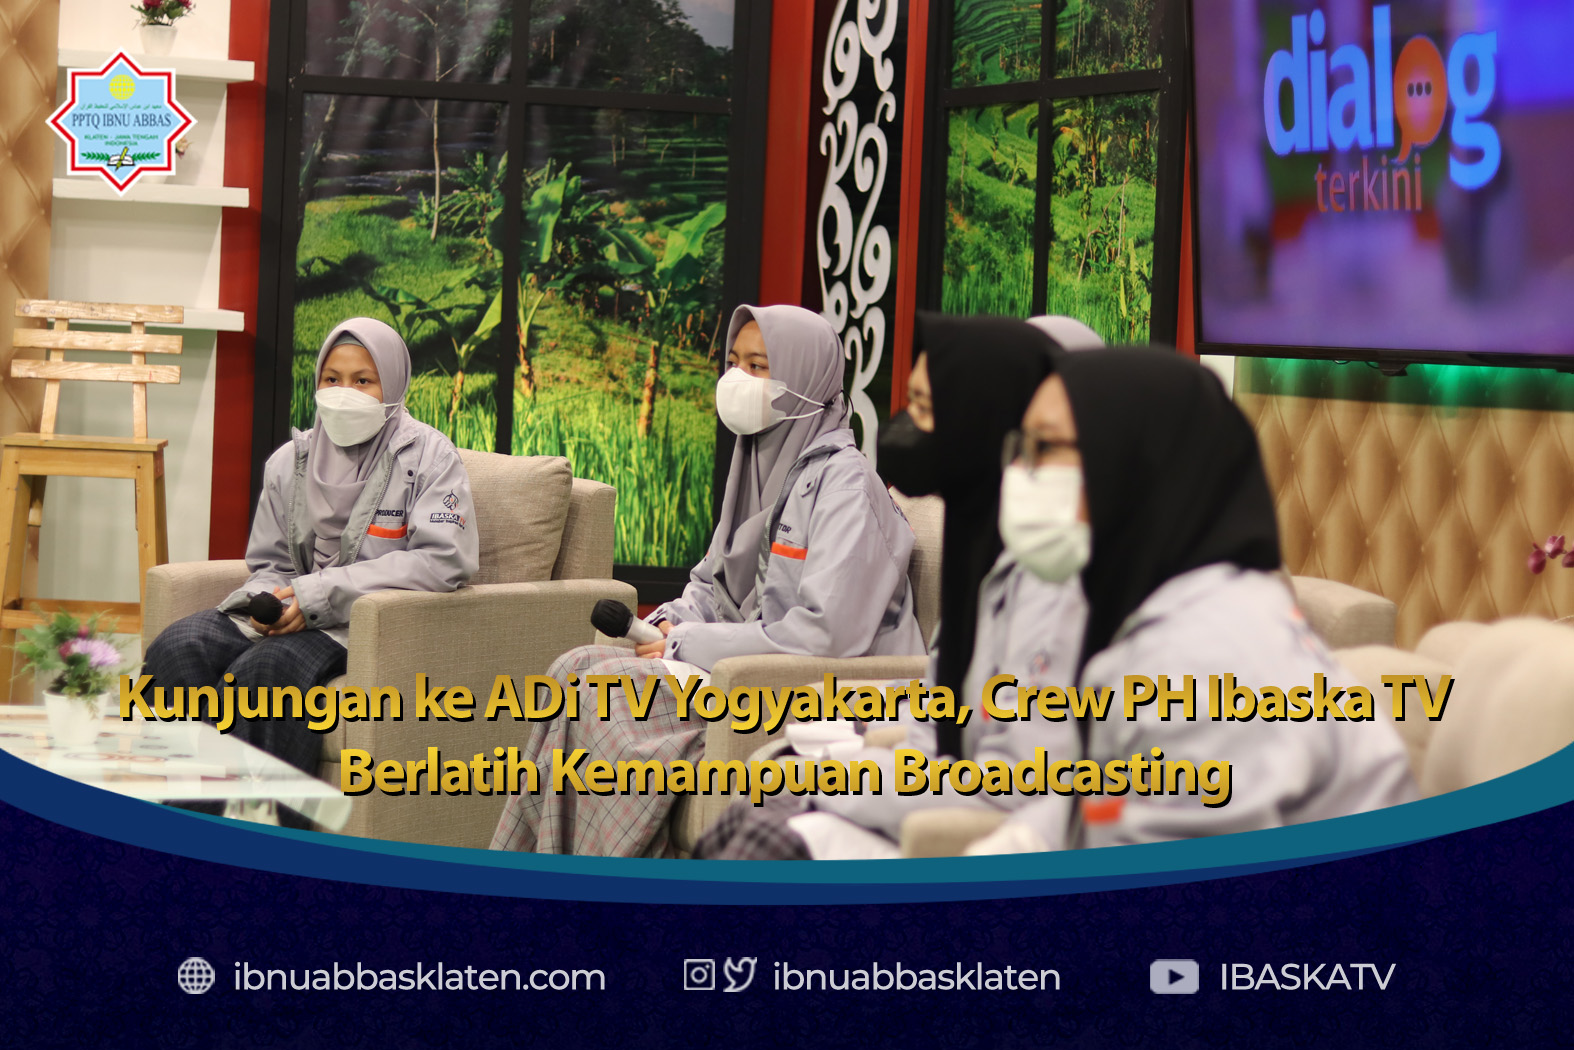 Crew PH Ibaska TV Berlatih Teknik Broadcasting di ADi TV Yogyakarta